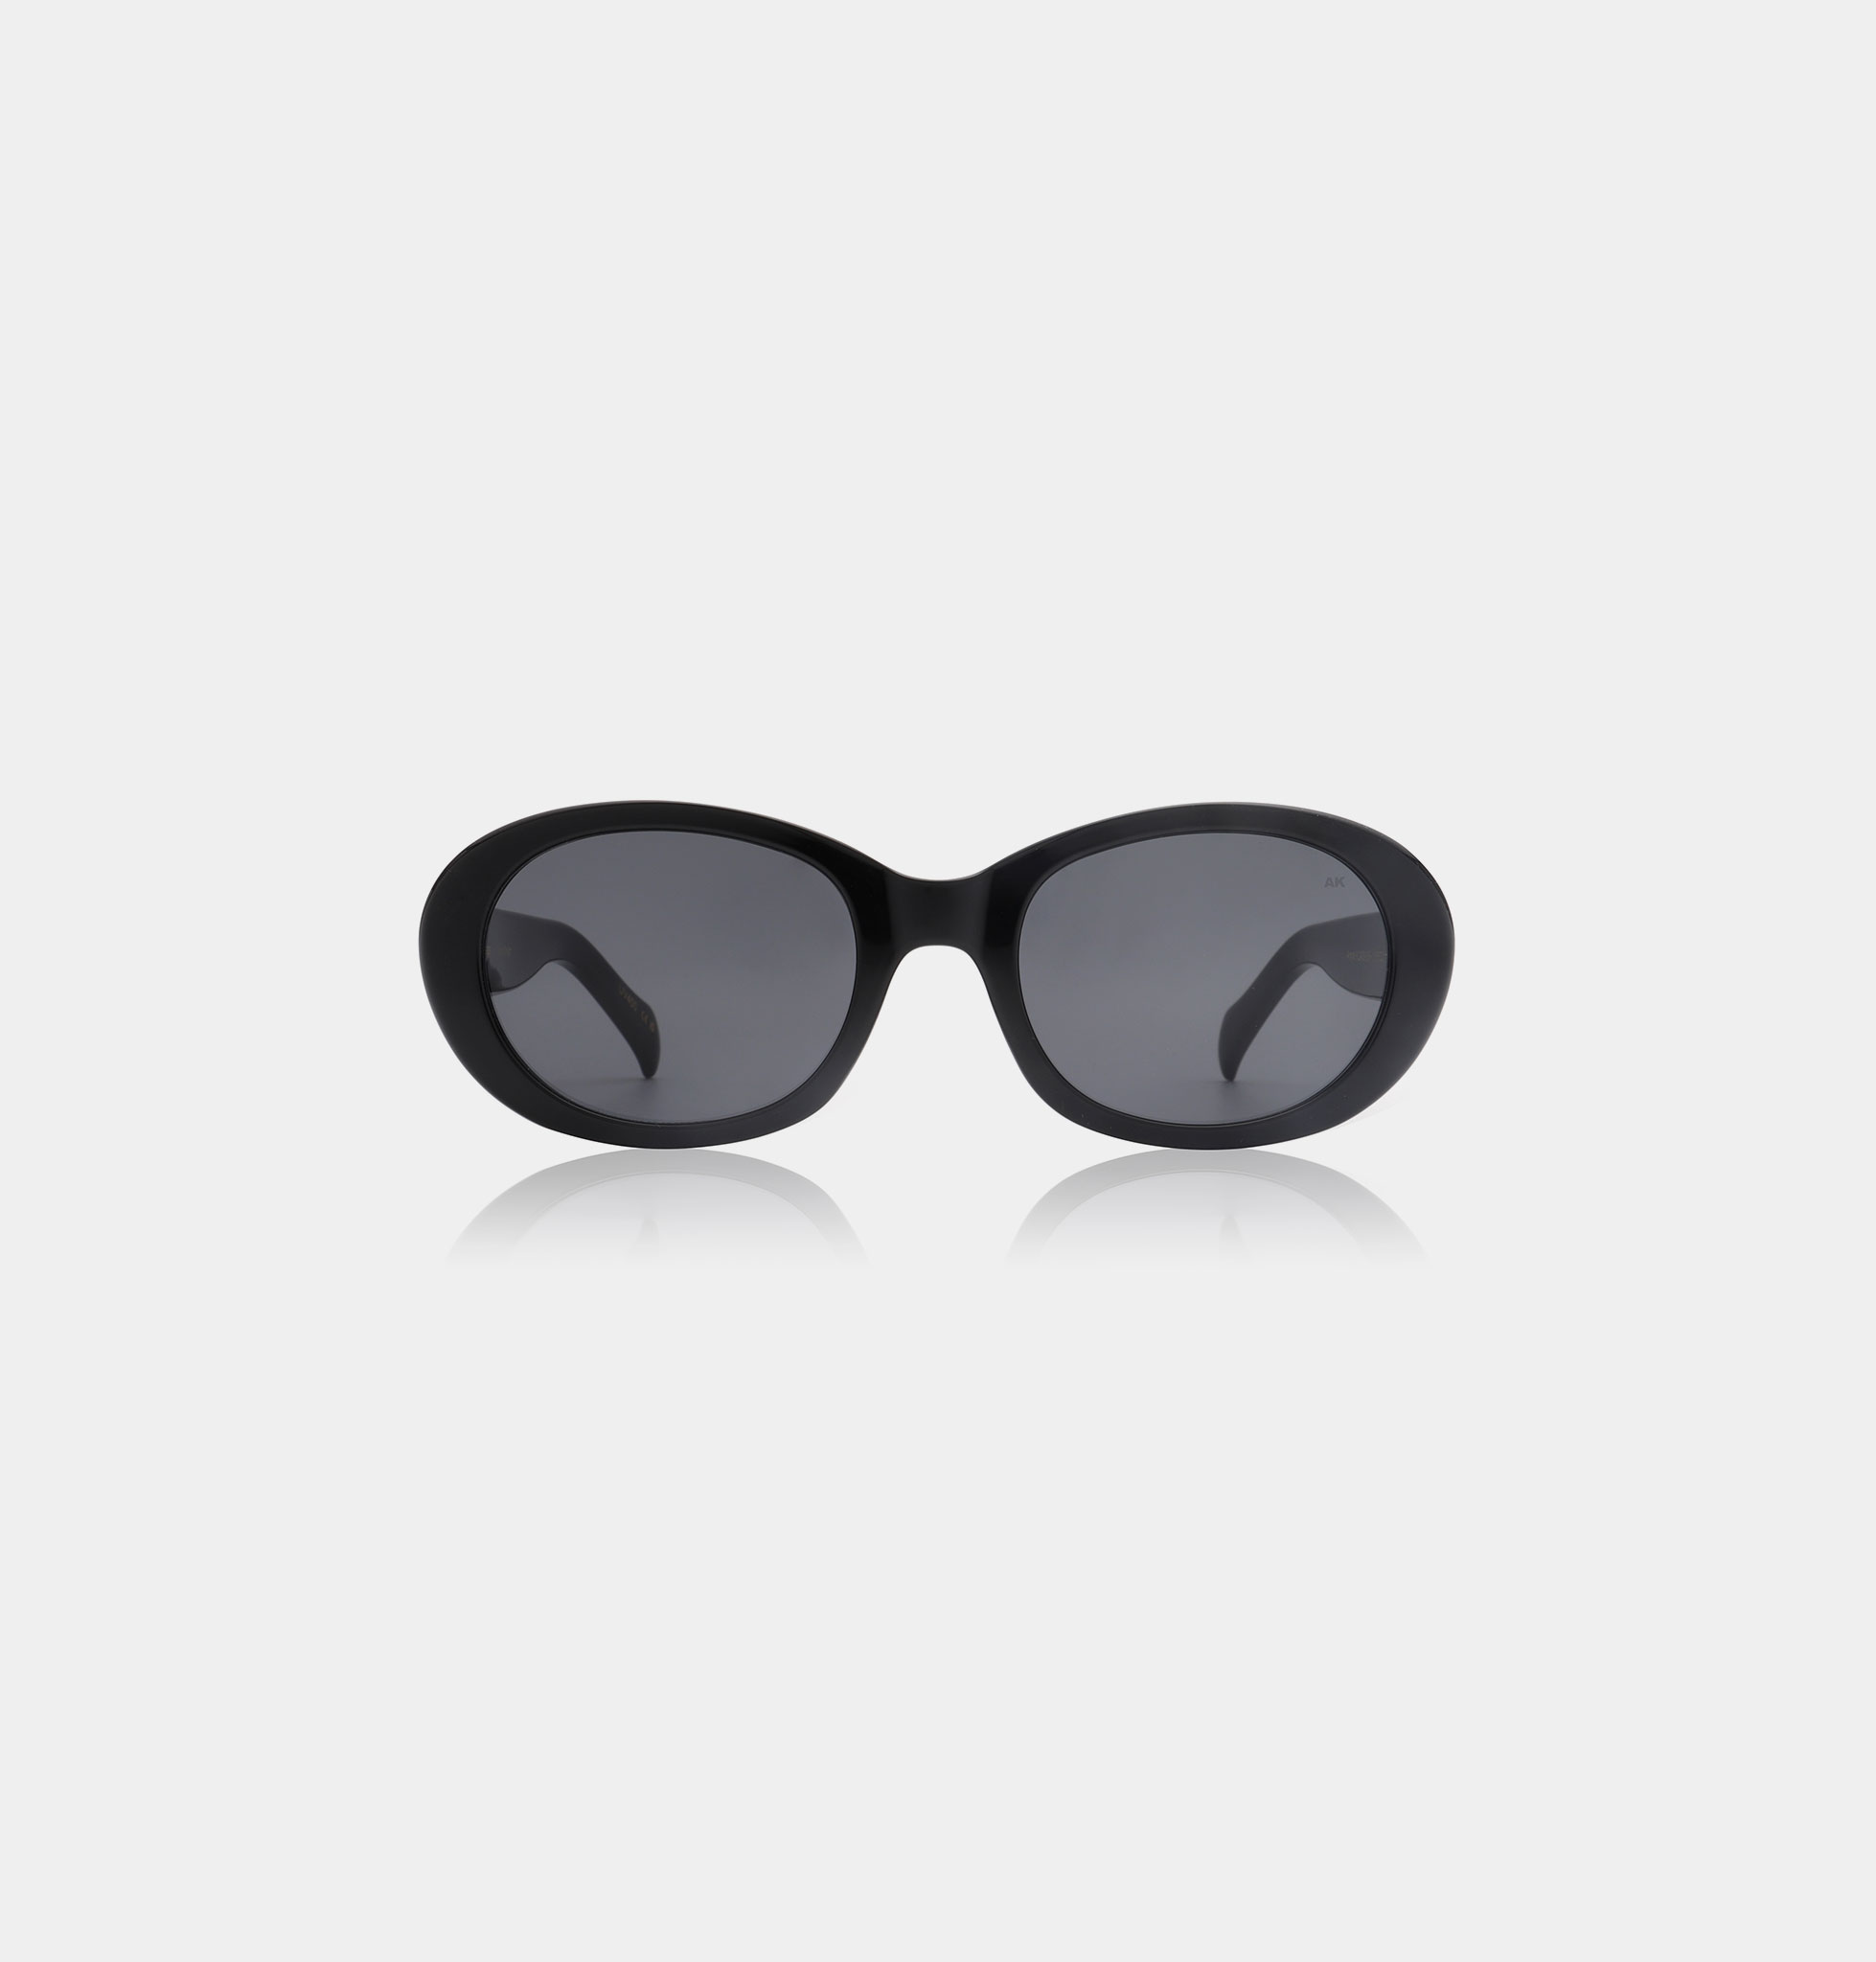 A.Kjaerbede zonnebril model ANMA kleur zwart met grijze glazen AKsunnies bril sunglasses eyewear